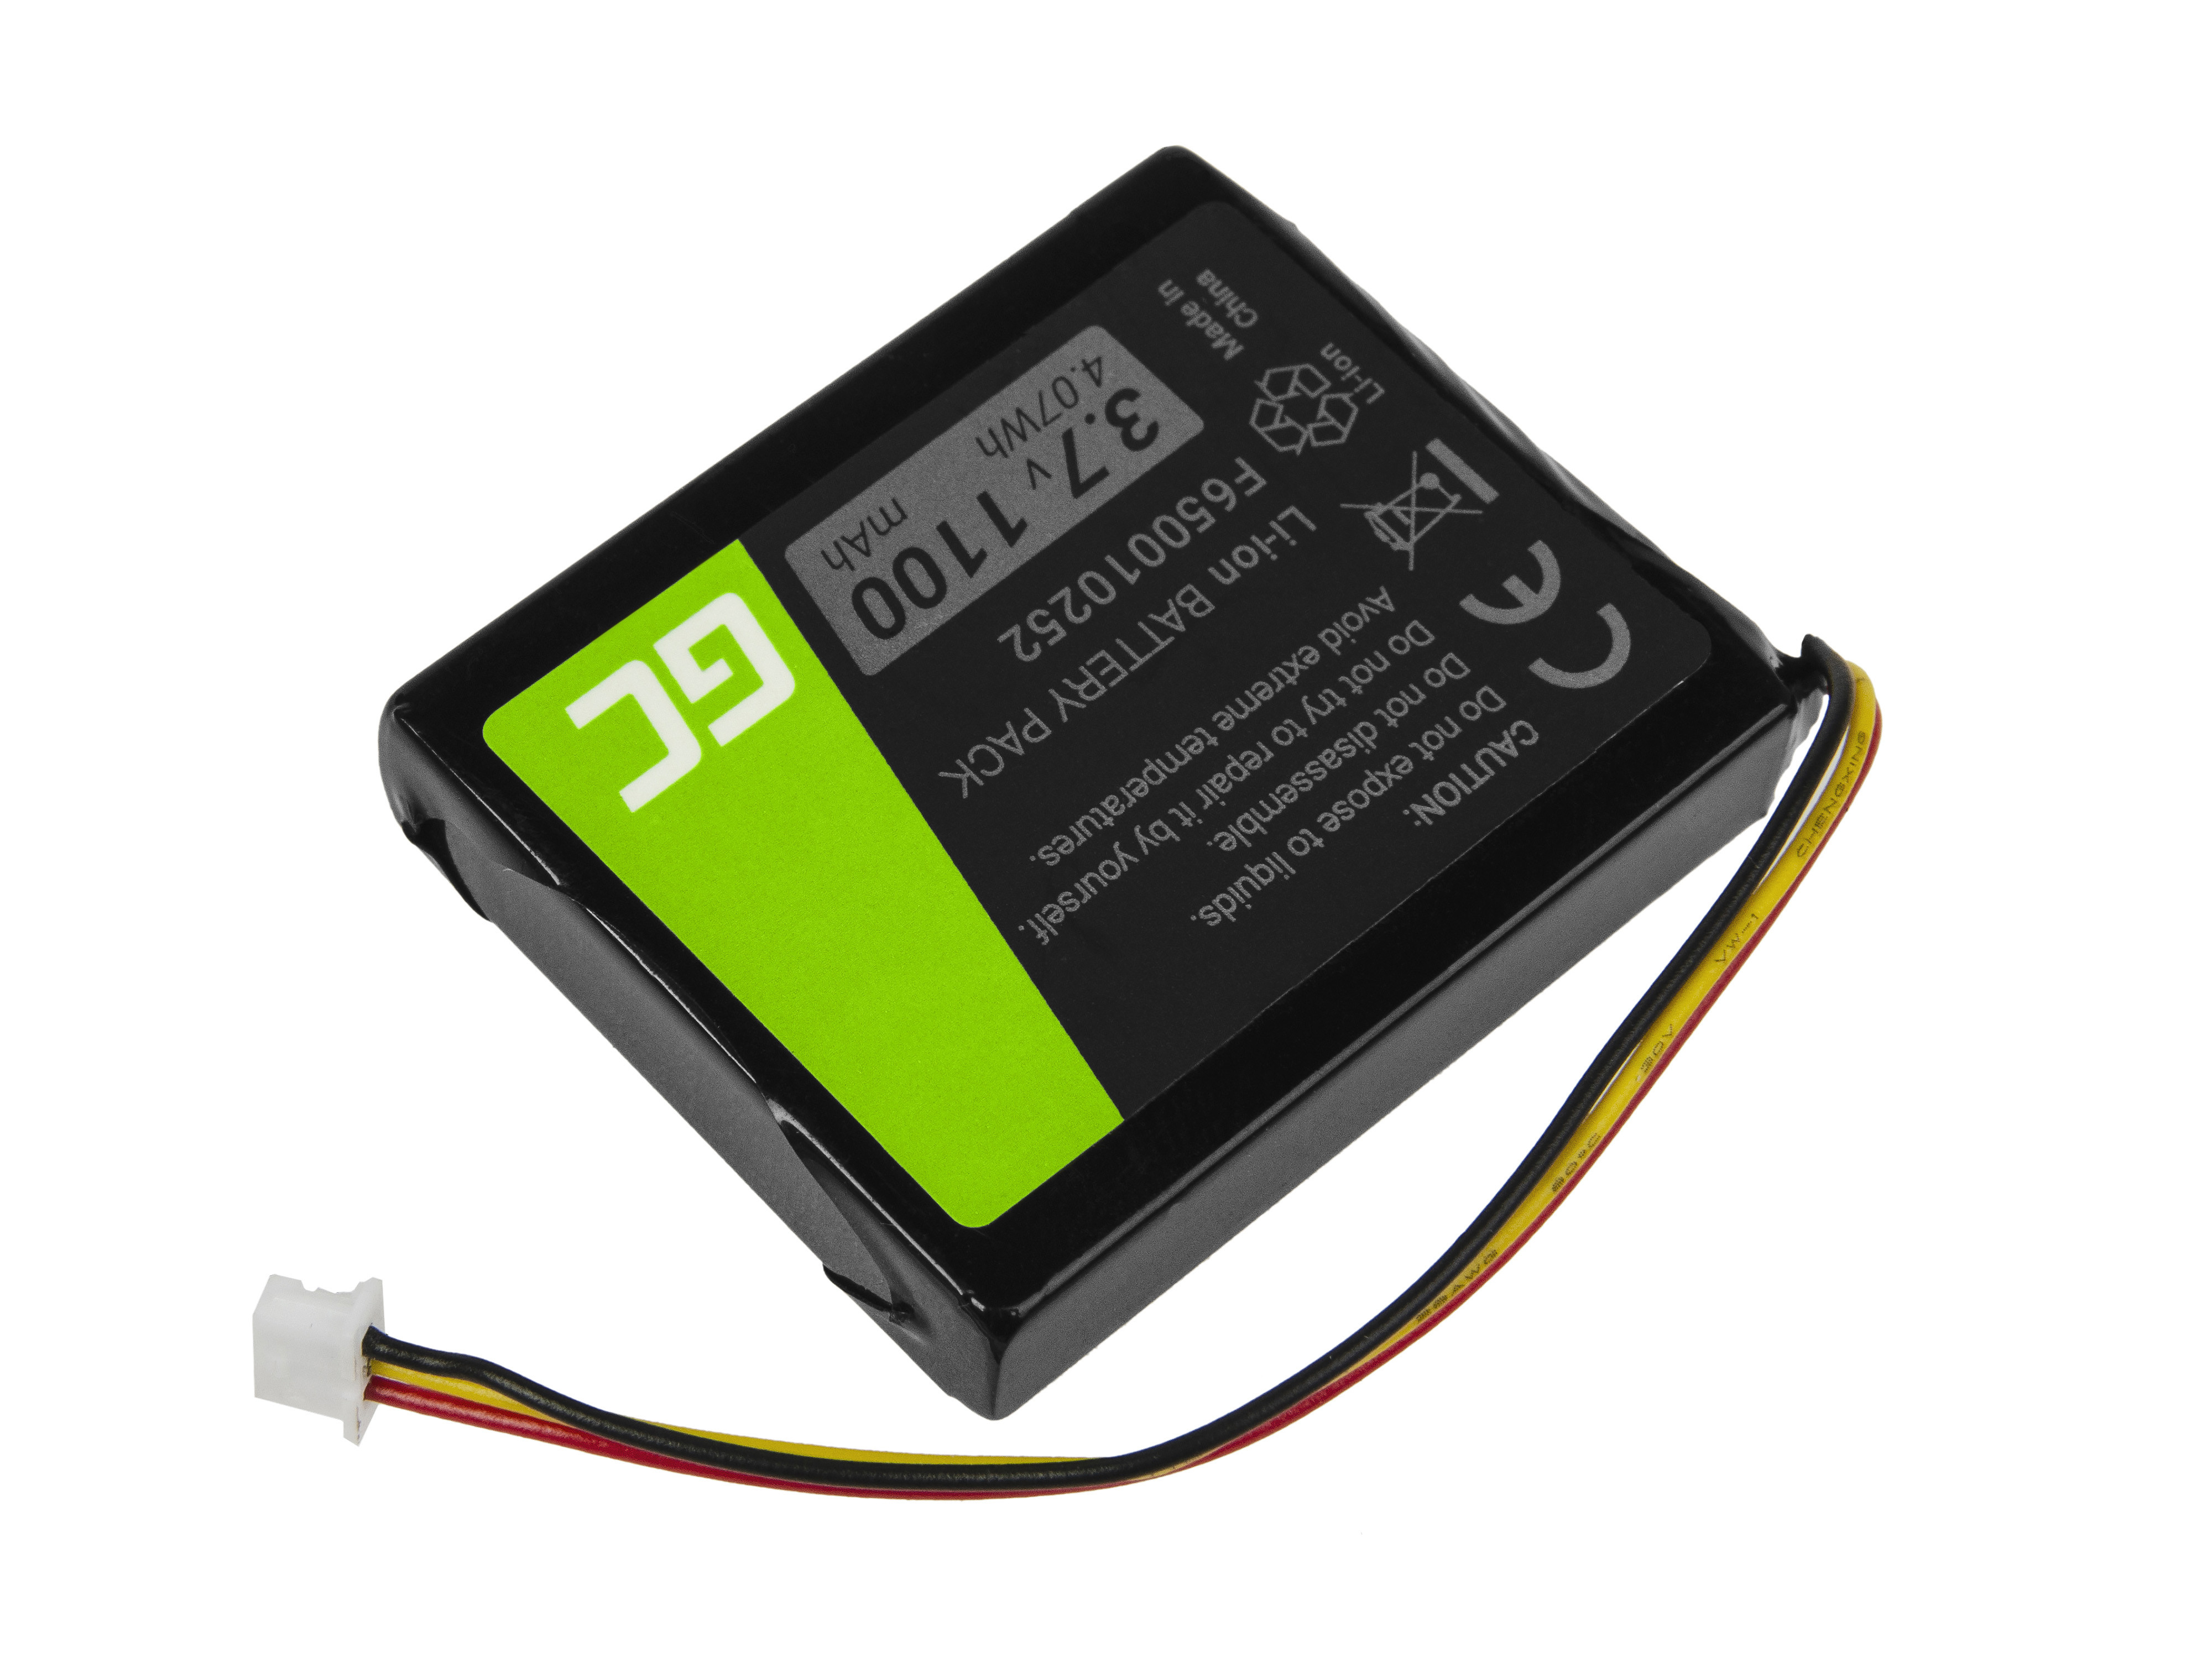 EOL-Green Cell GPS Battery F650010252 TomTom One V1 V2 V3 XL Europe Regional Rider